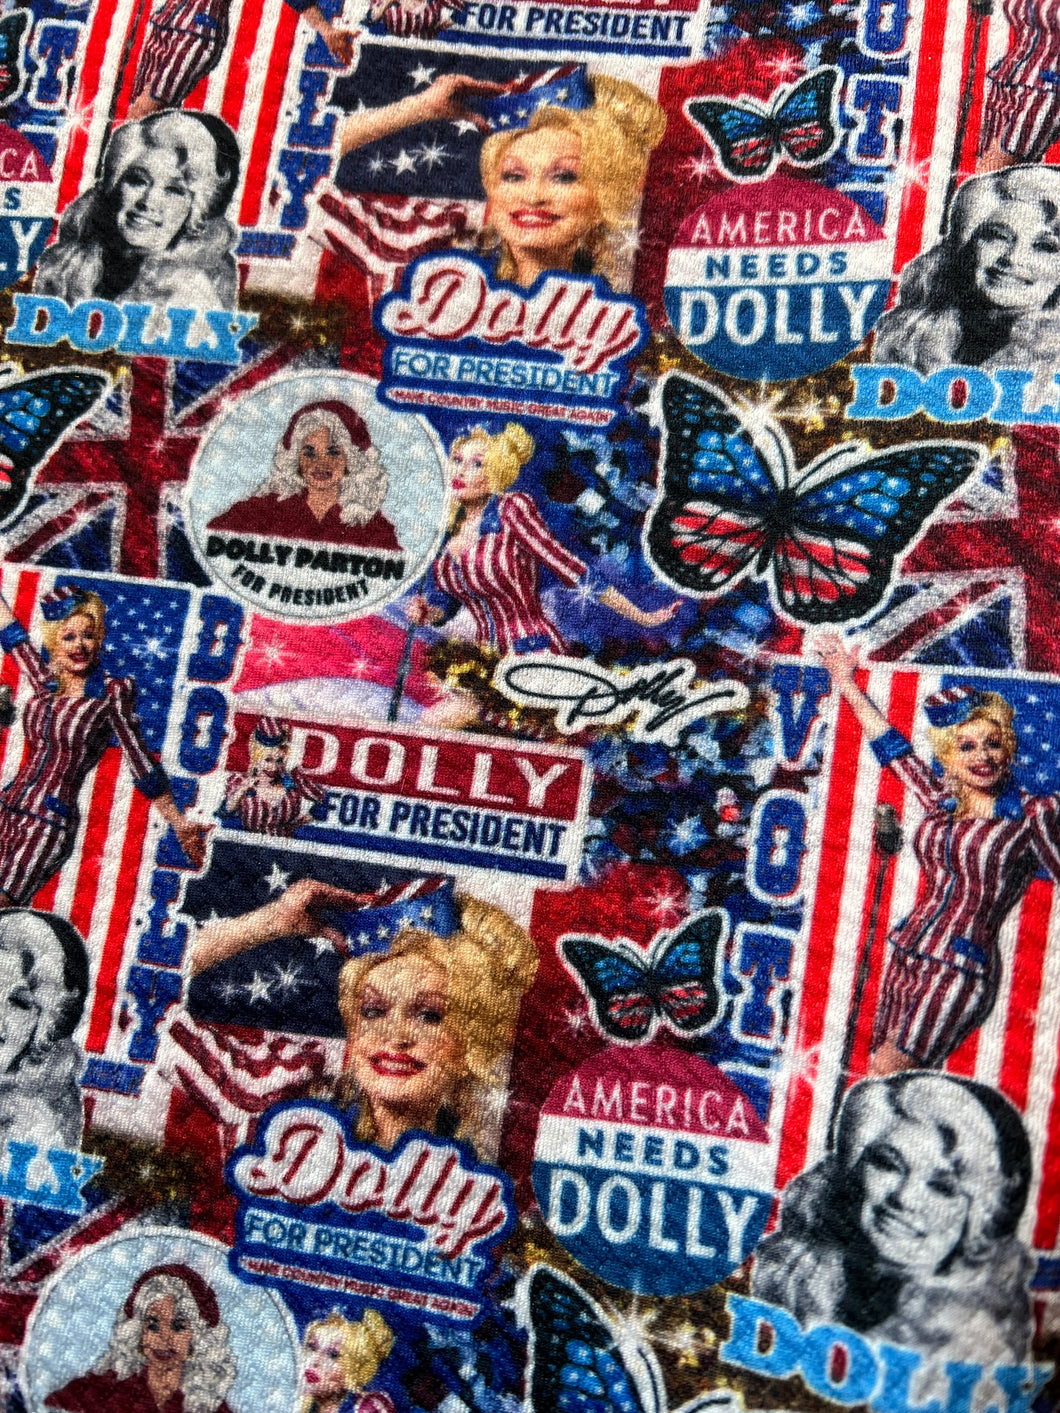 Dolly for President